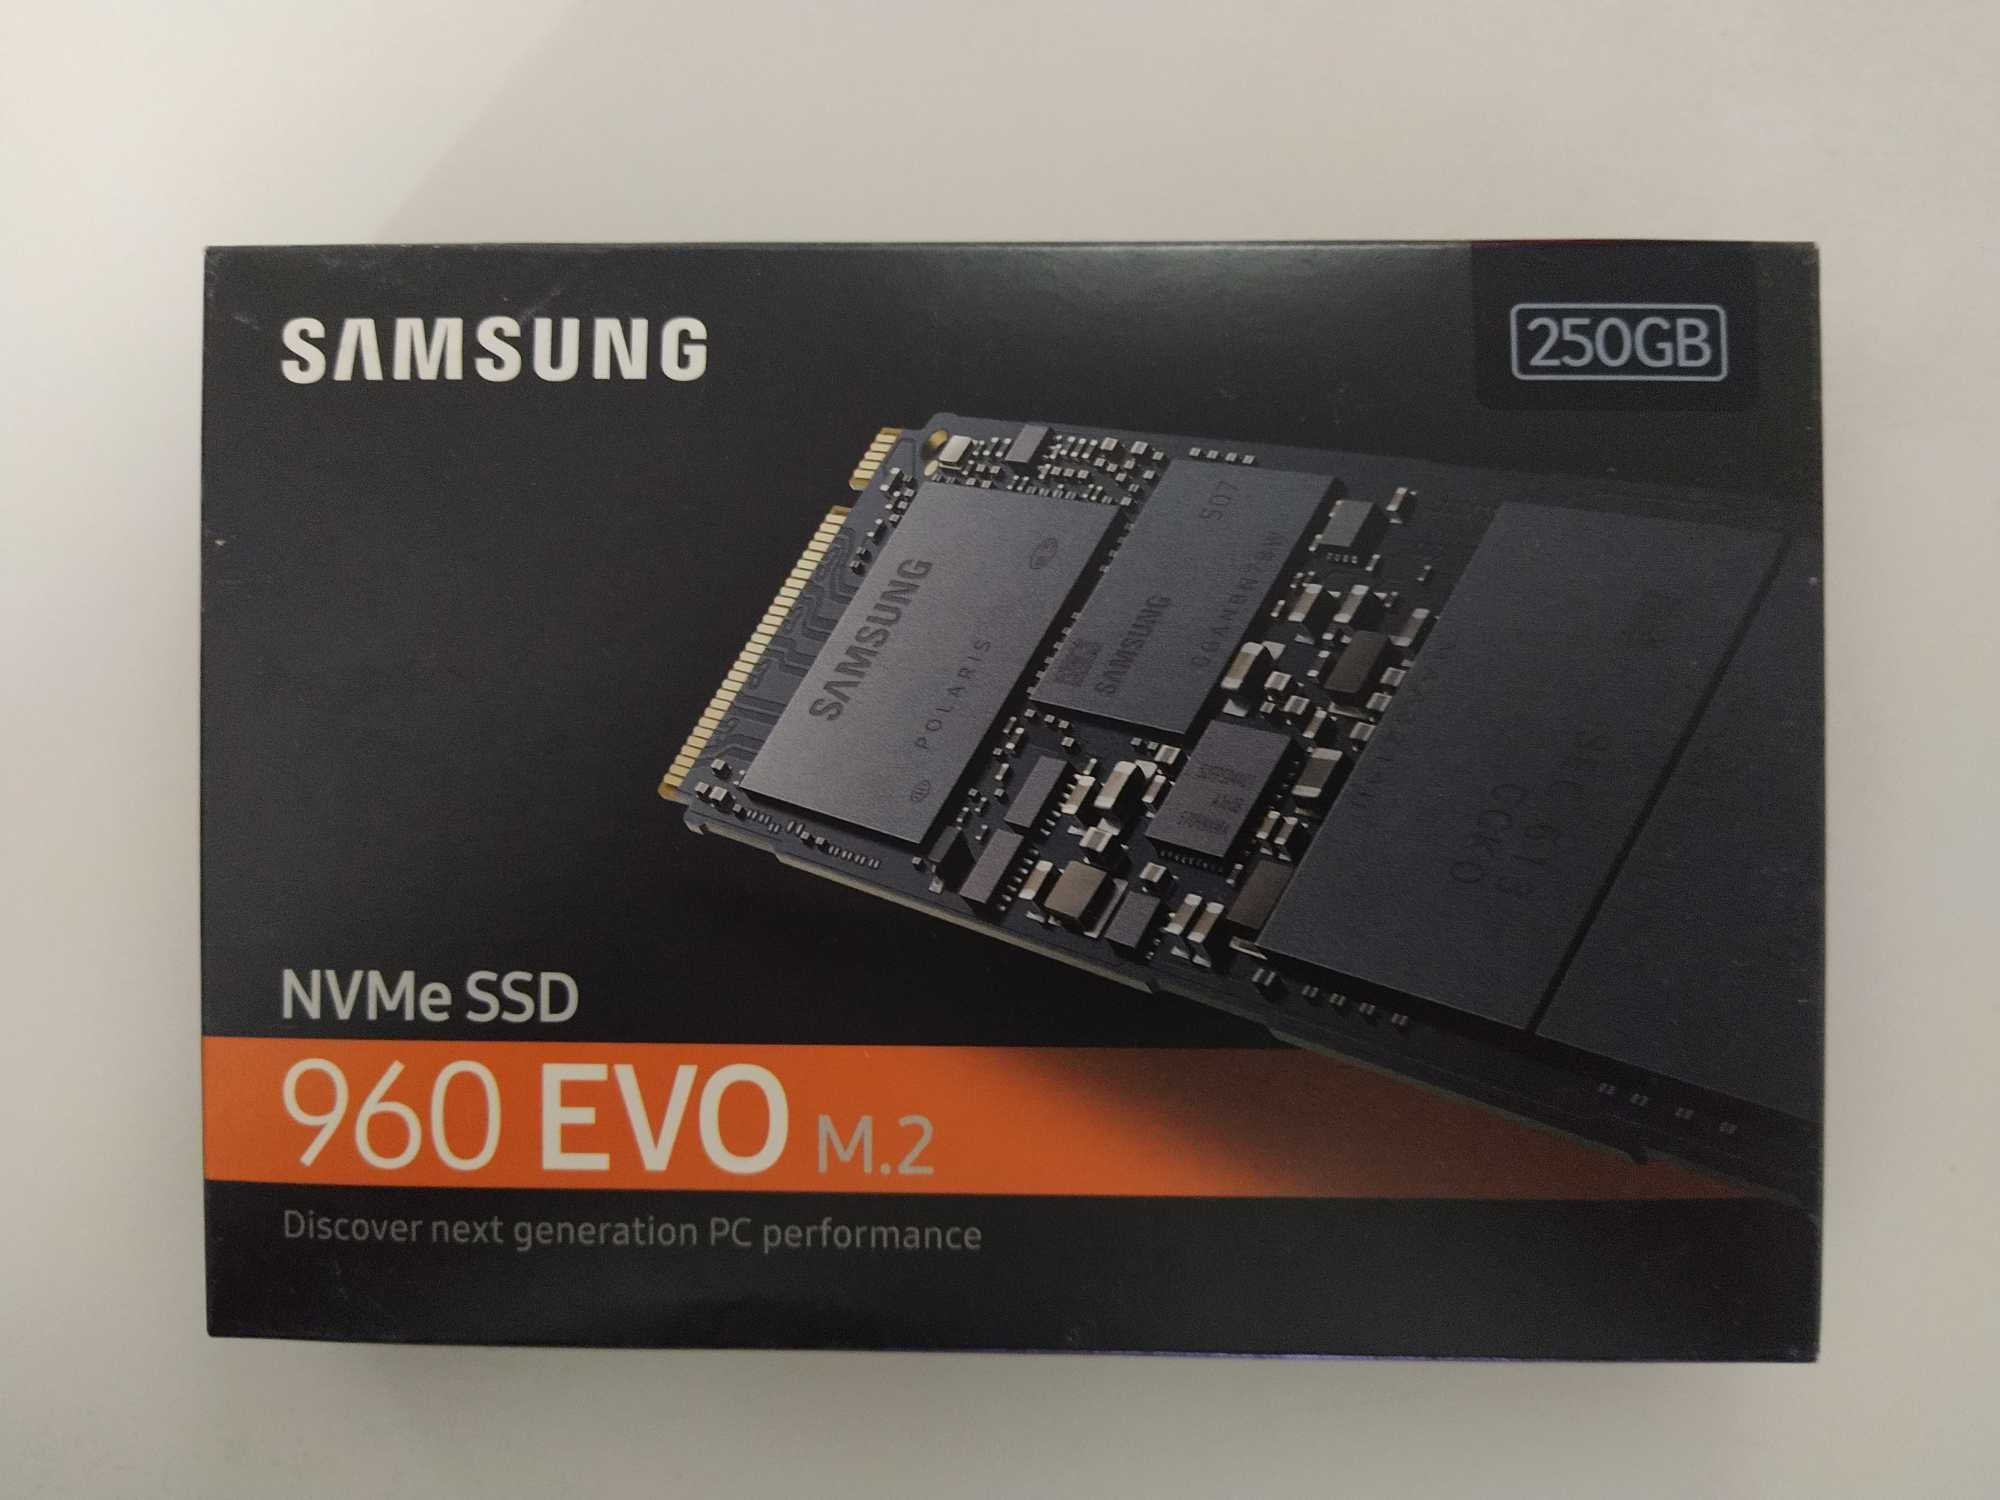 Samsung NVMe SSD 960 EVO  M.2 250GB